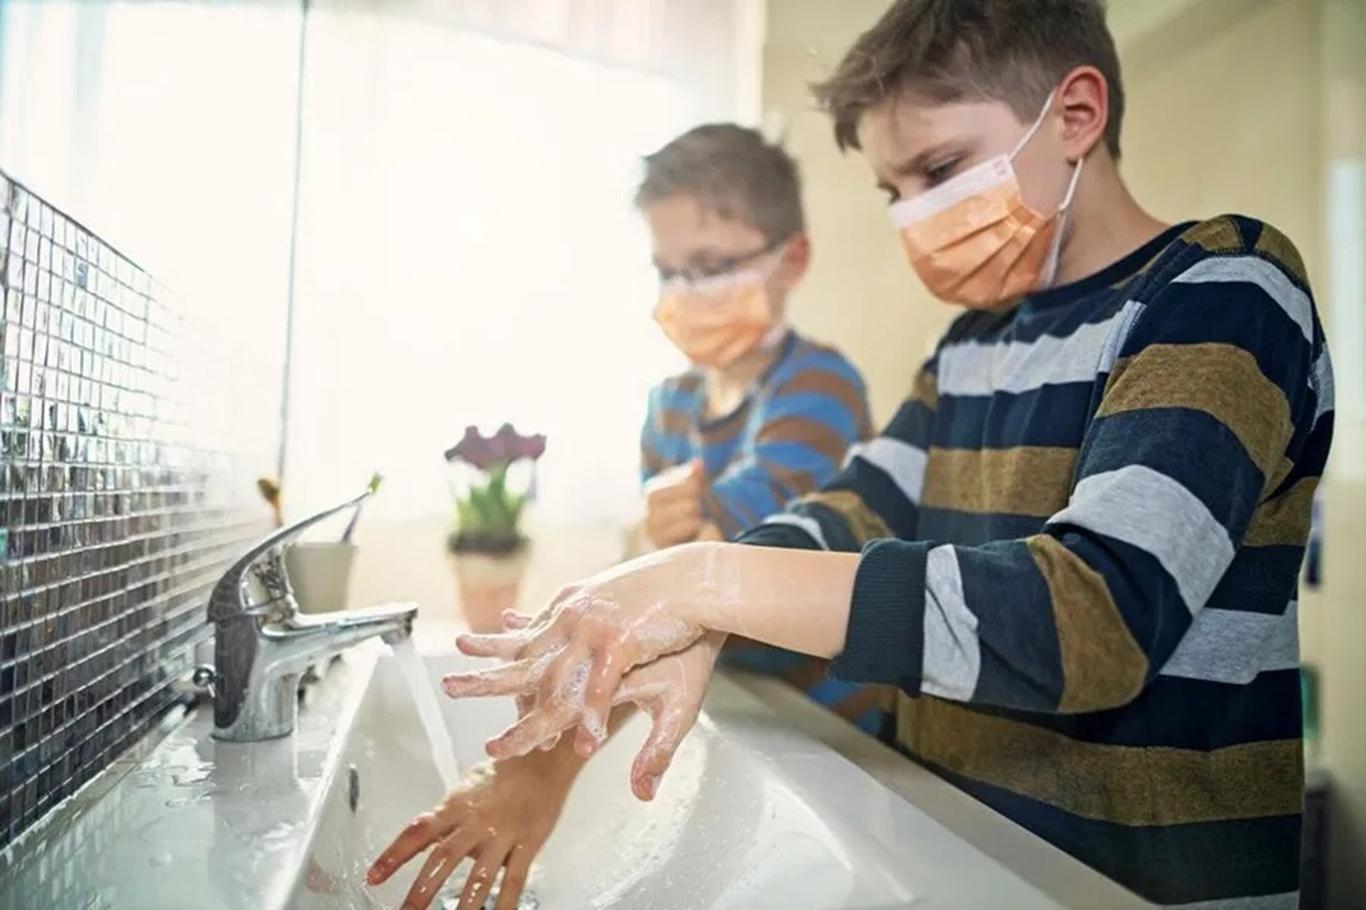 2 in 5 schools around the world lacks basic handwashing facilities prior : UNICEF, WHO